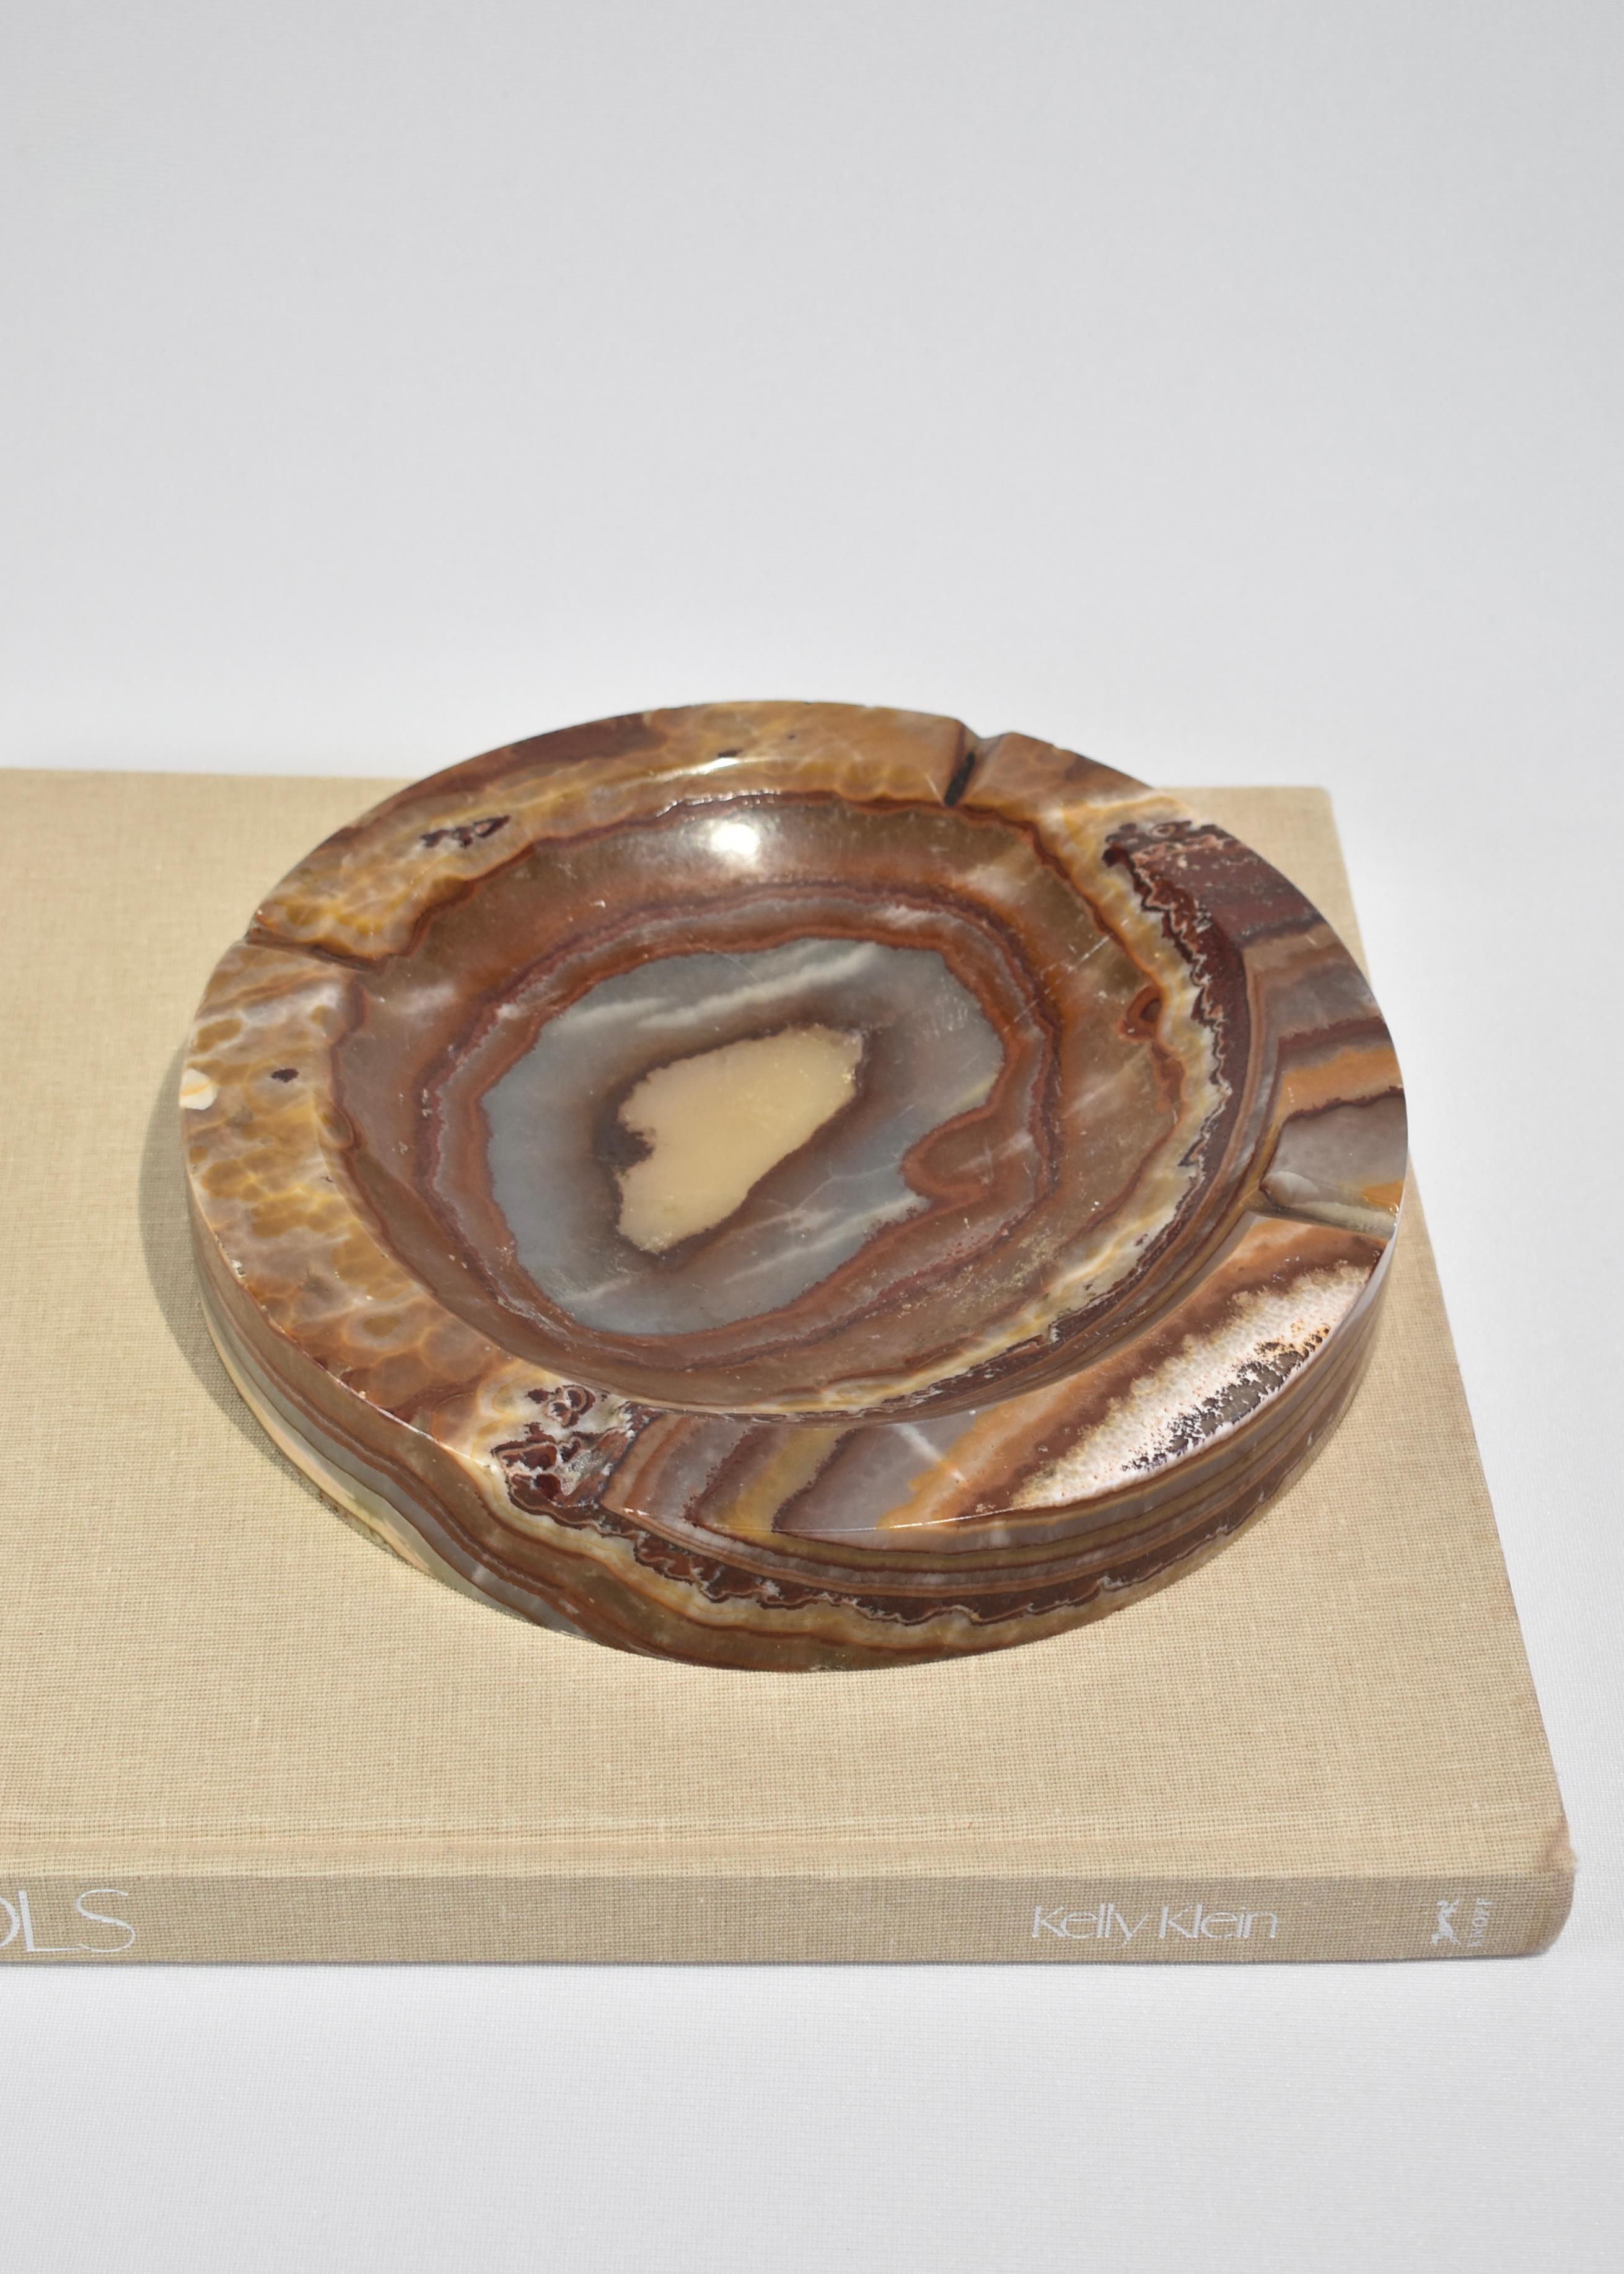 Vintage oversized carved onyx catchall or ashtray.